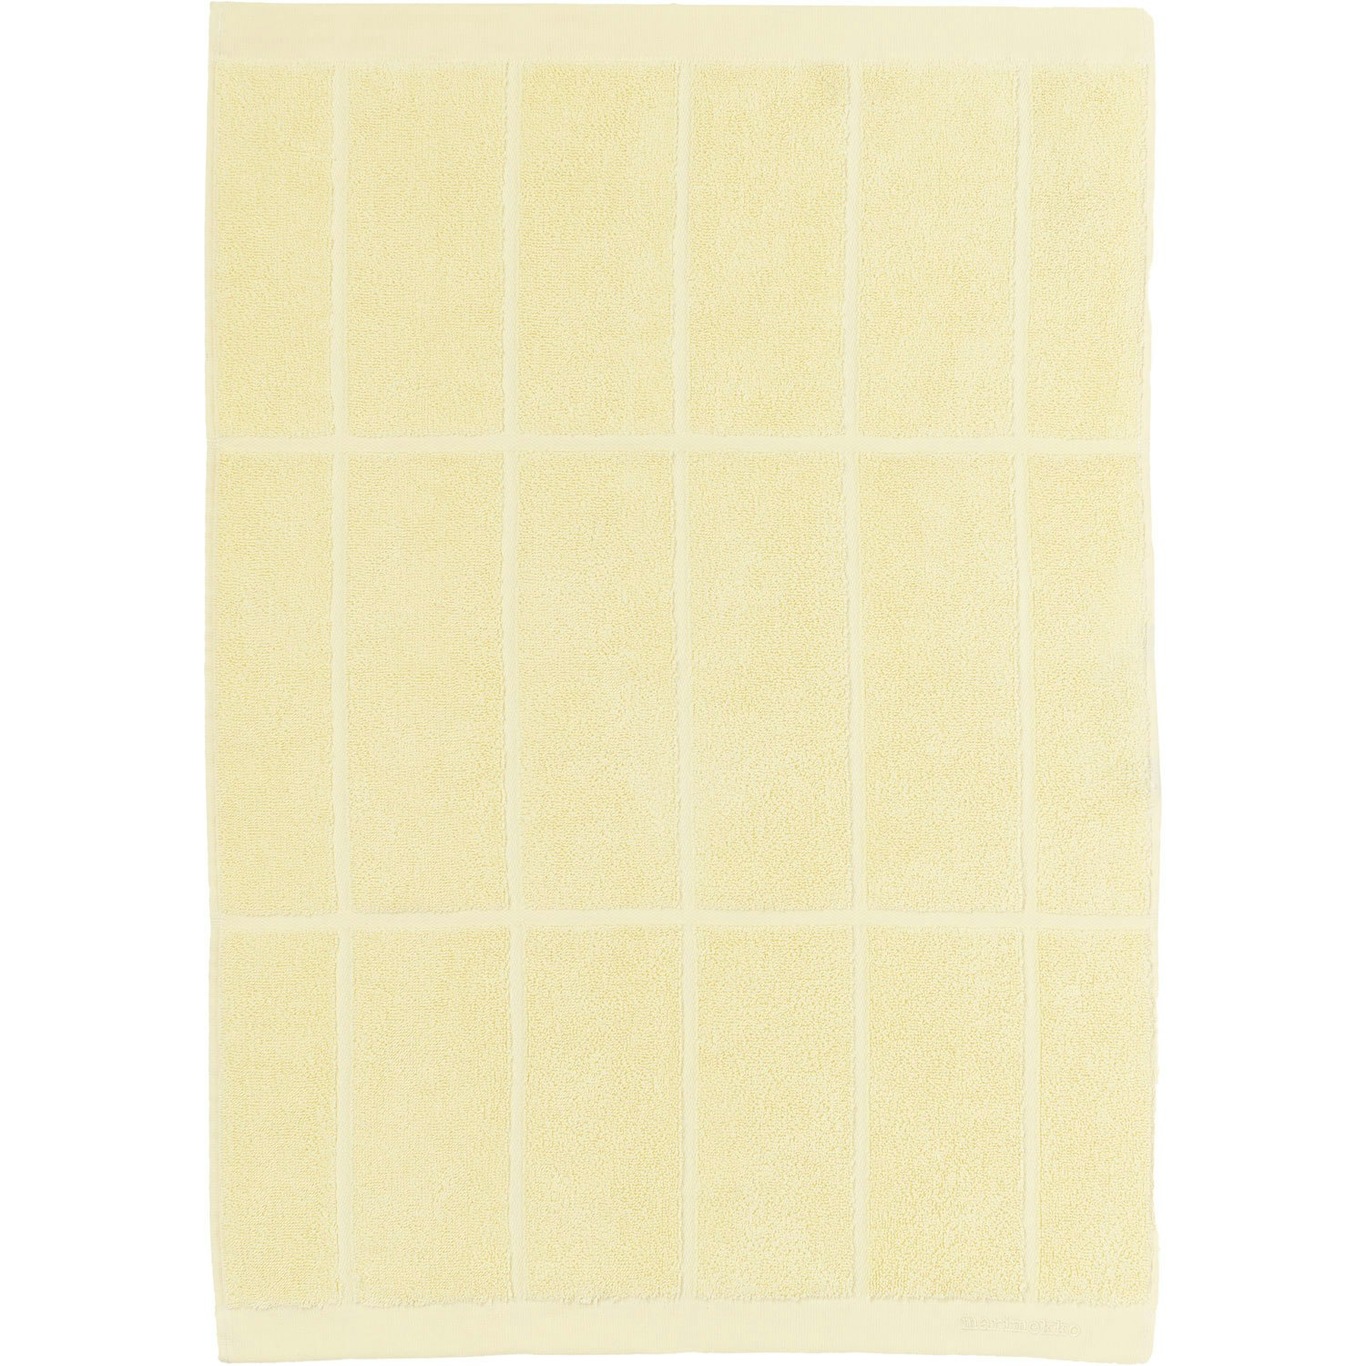 Tiiliskivi Towel 50x70 cm, Butter Yellow